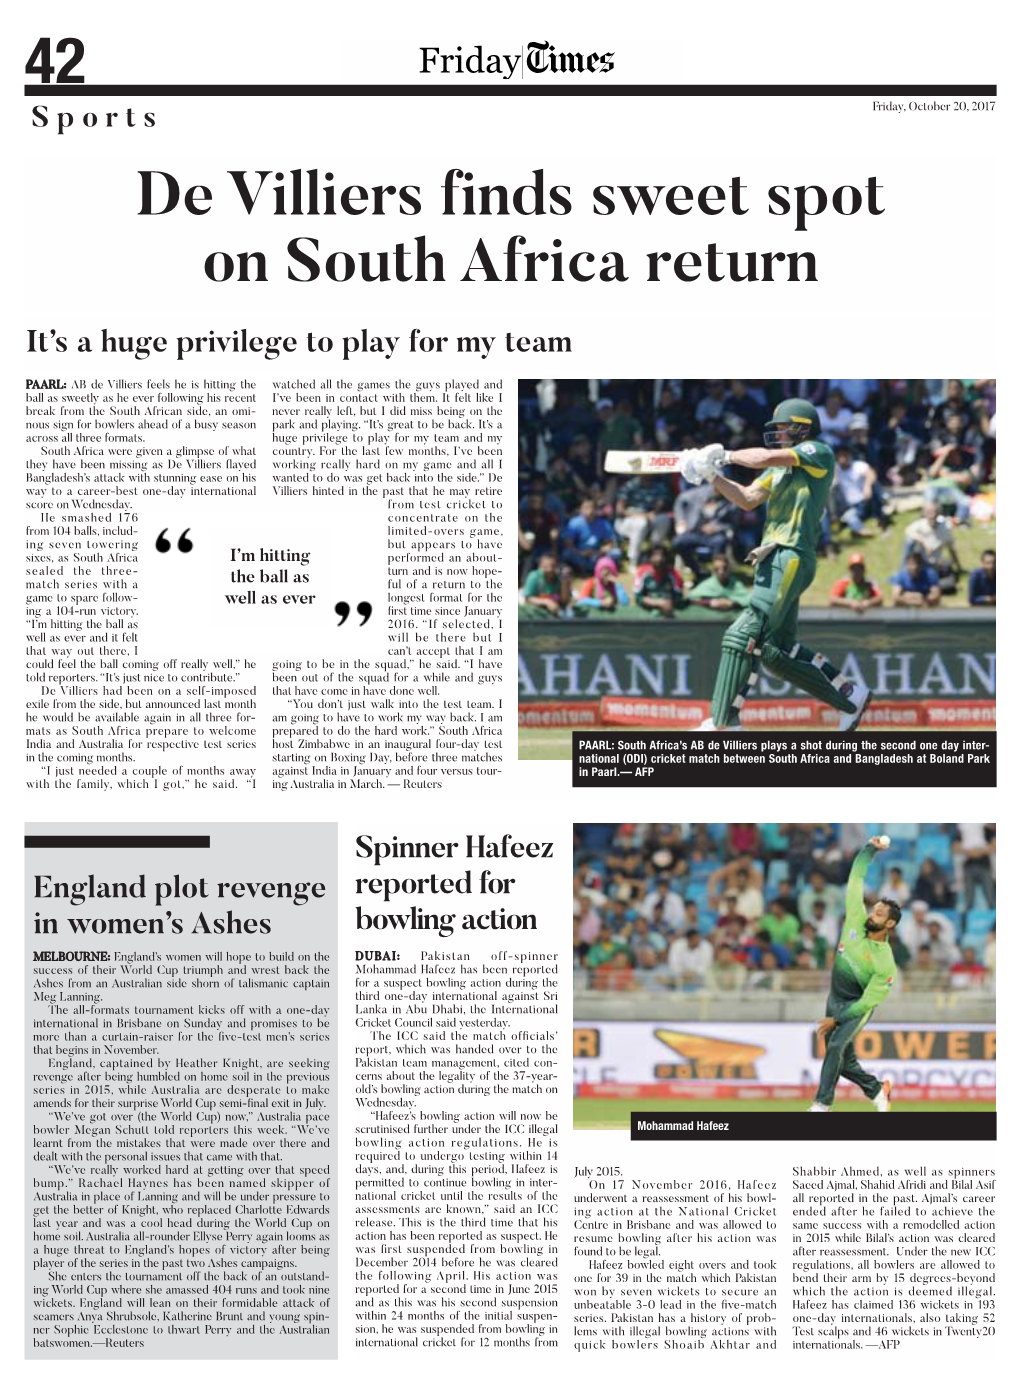 De Villiers Finds Sweet Spot on South Africa Return